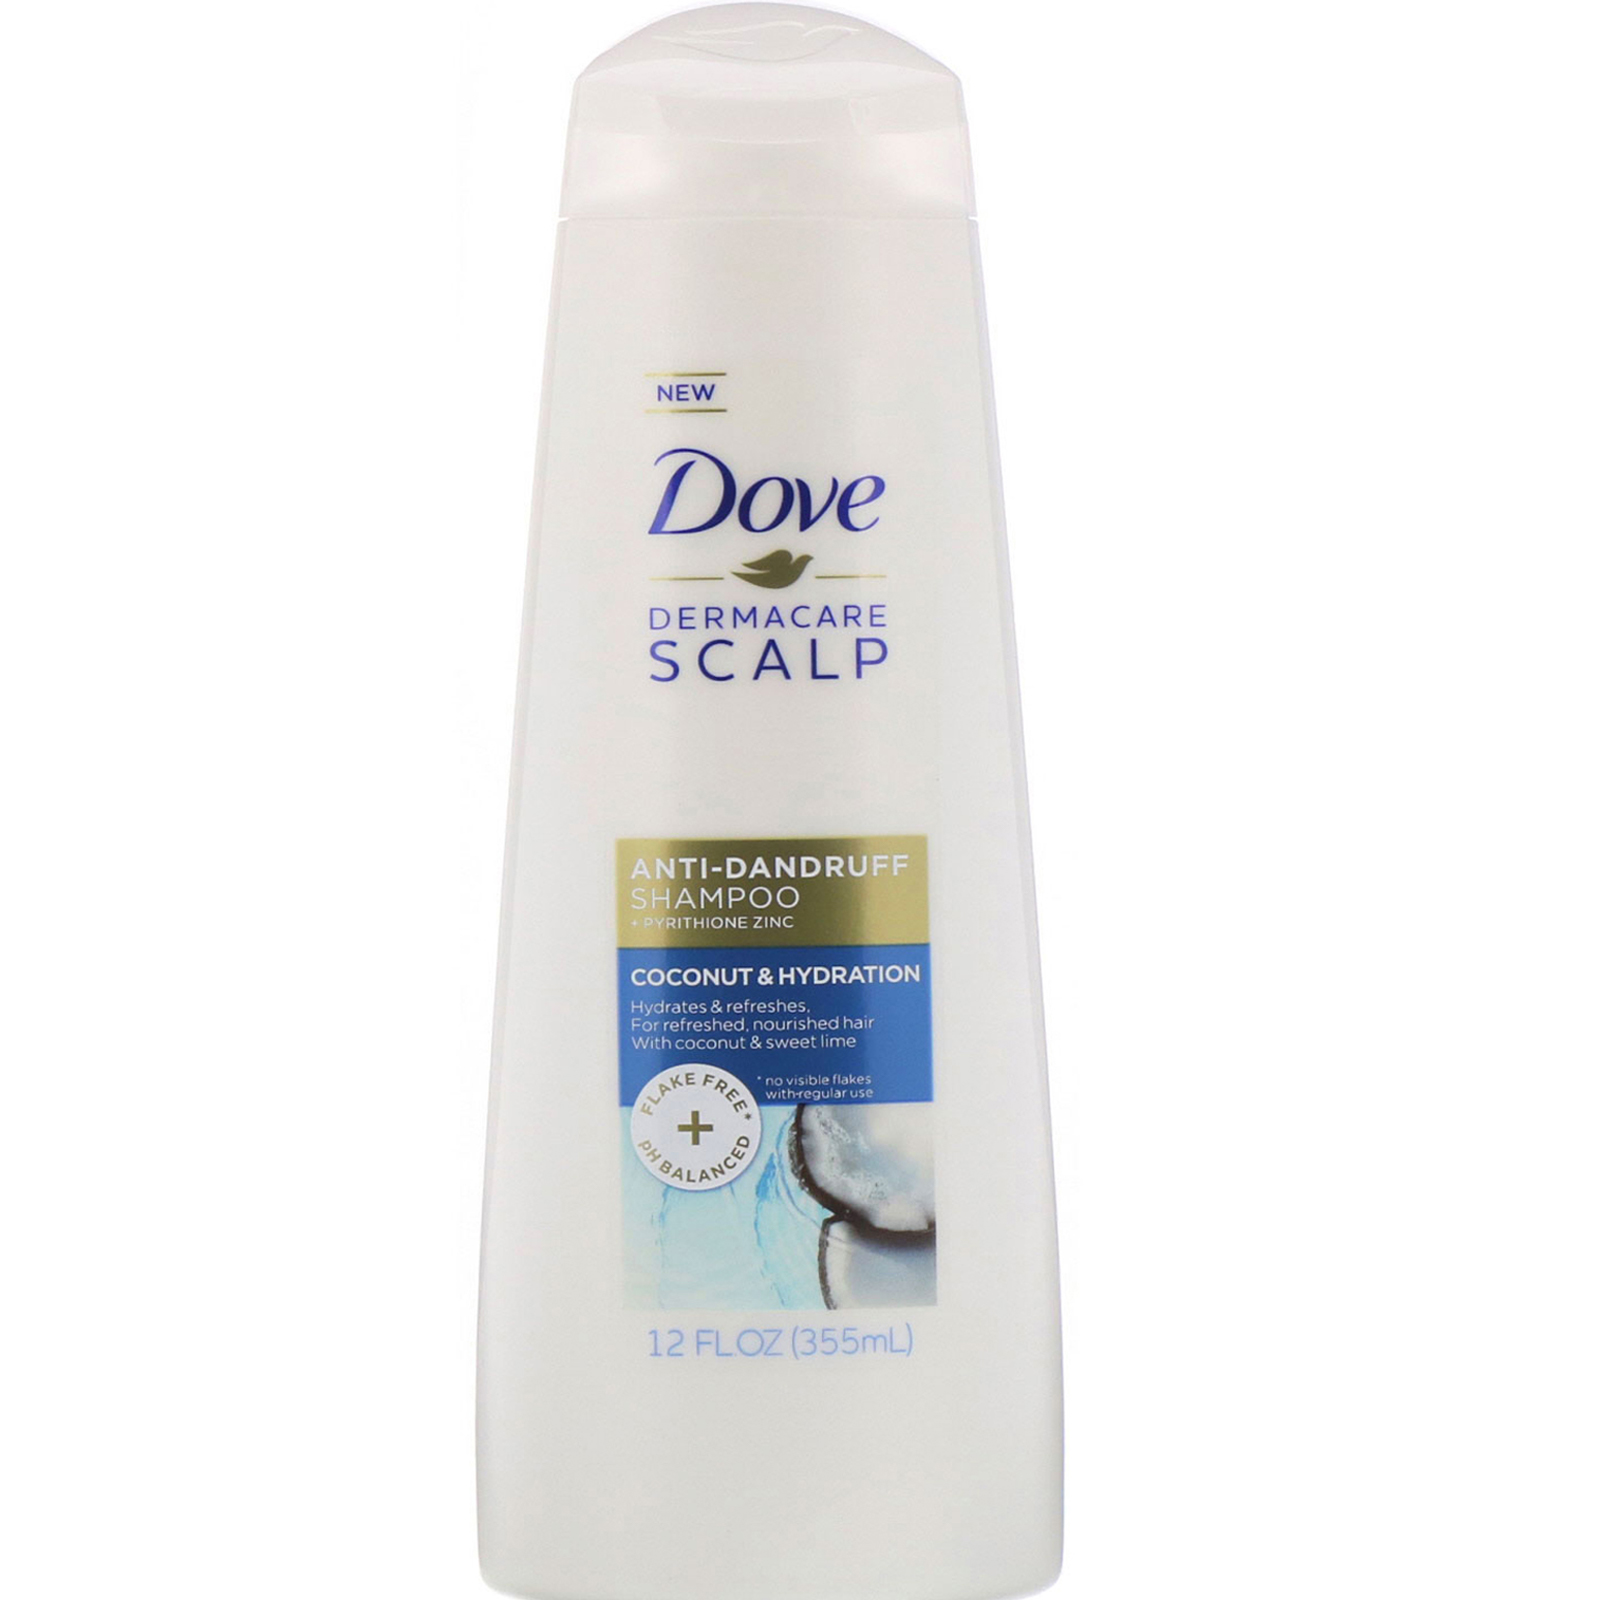 dove clarify and hydrate shampoo reviews